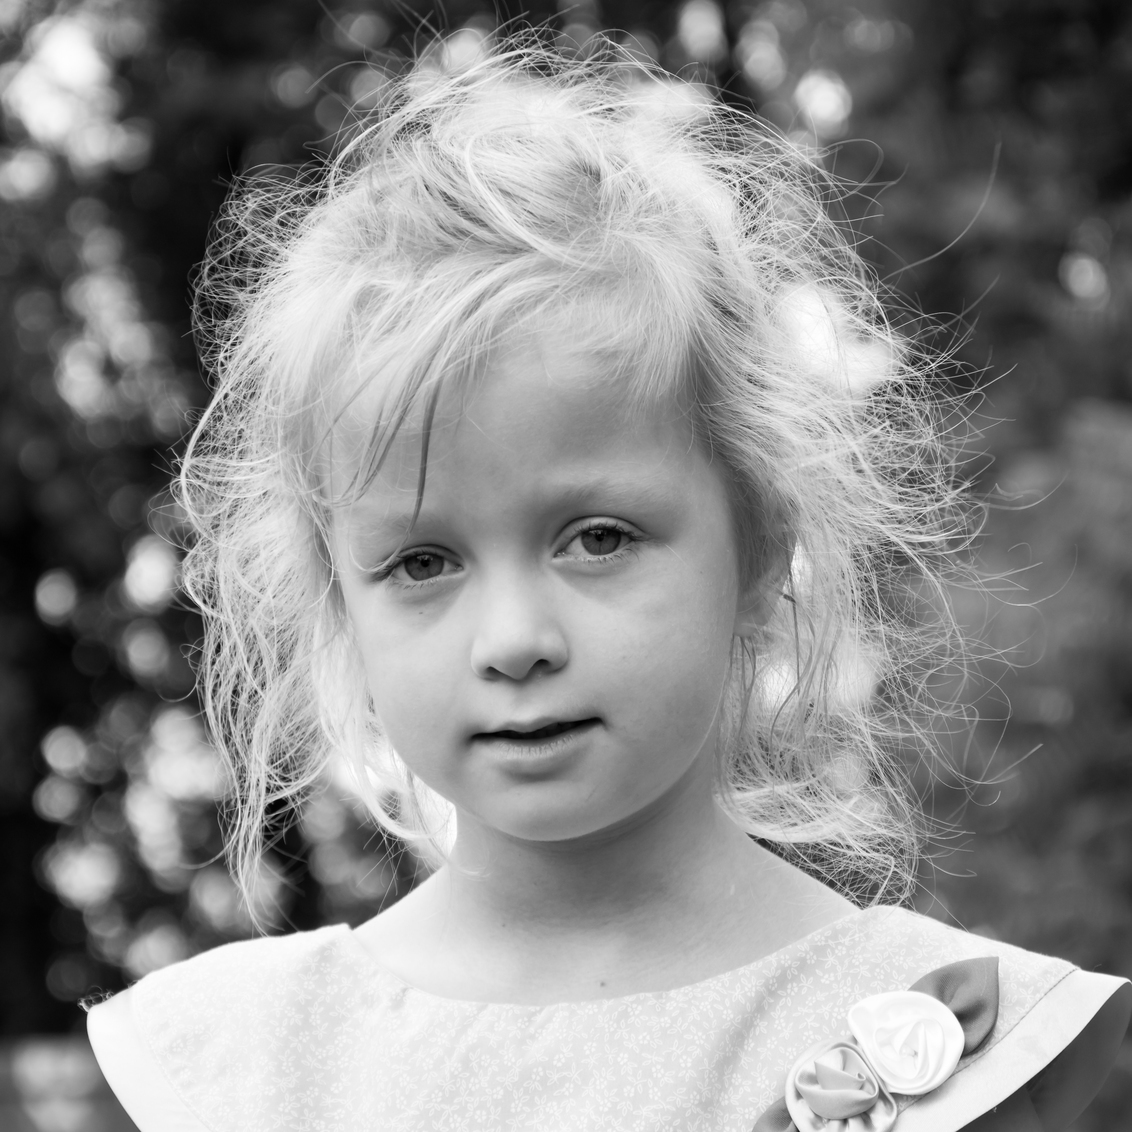 acuut los van Dat Meisje zwart wit - foto van Annemarie1965 - Portret - Zoom.nl